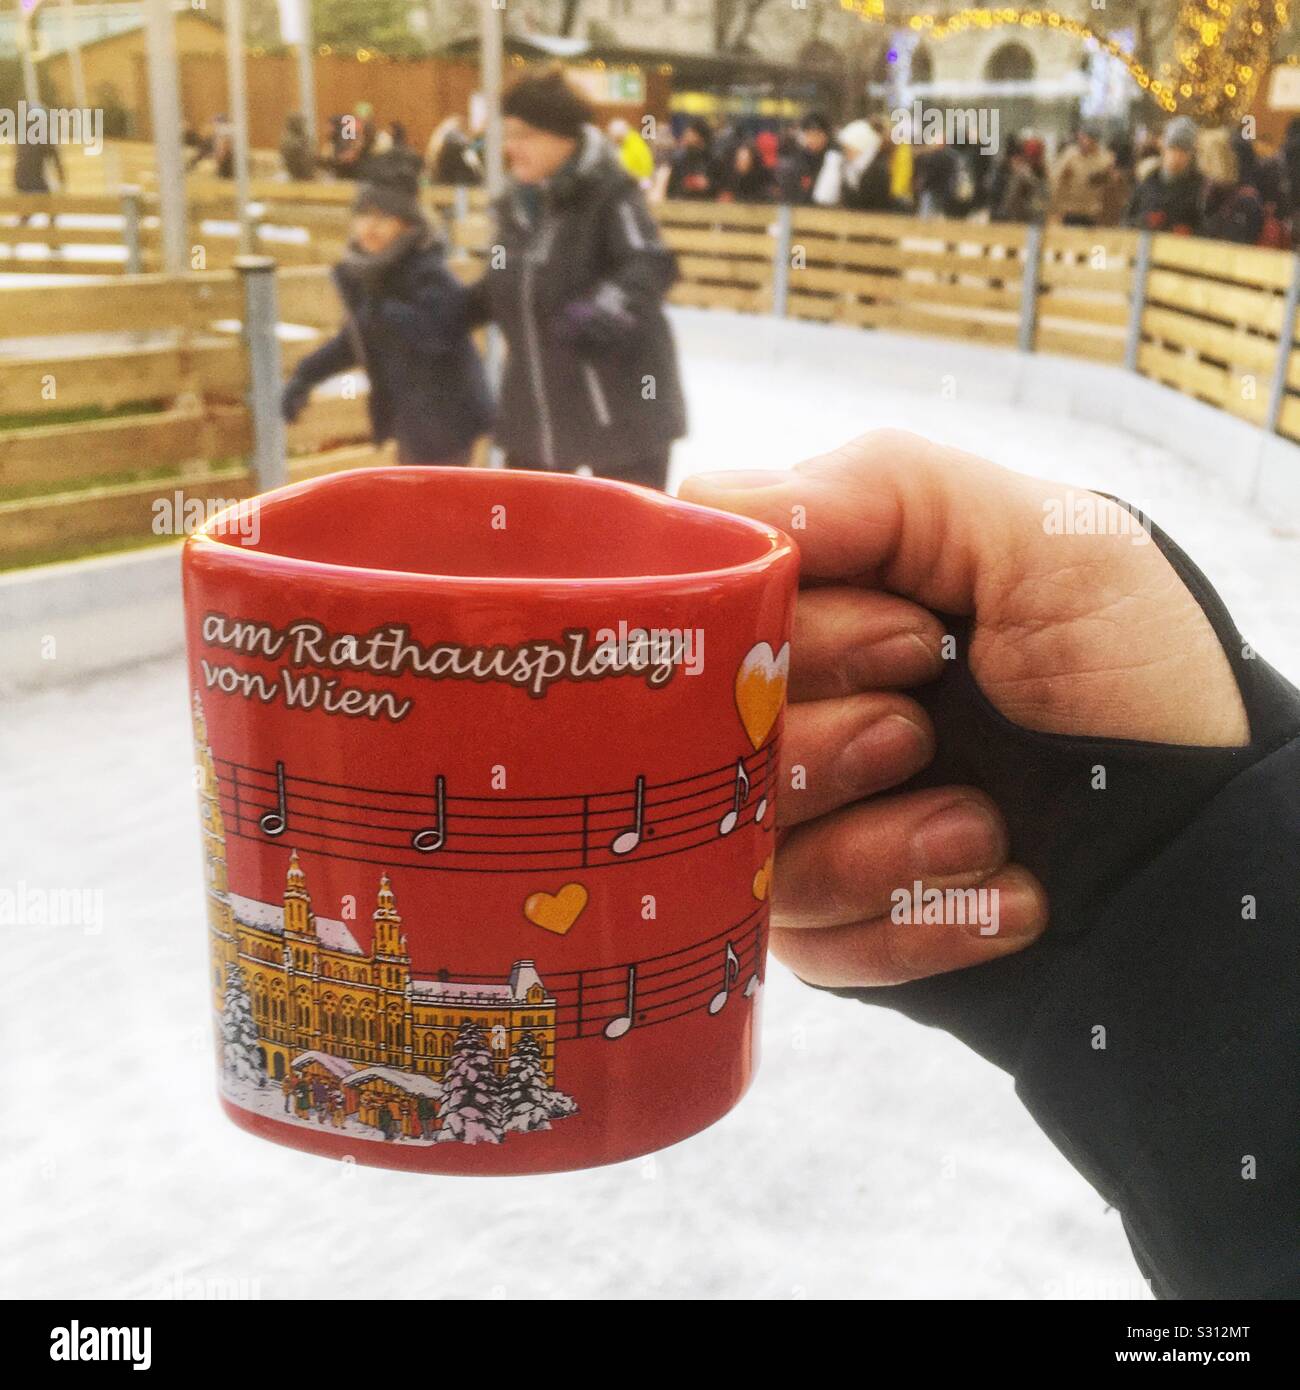 Mulled wine in mug with mug warmer Stock Photo - Alamy